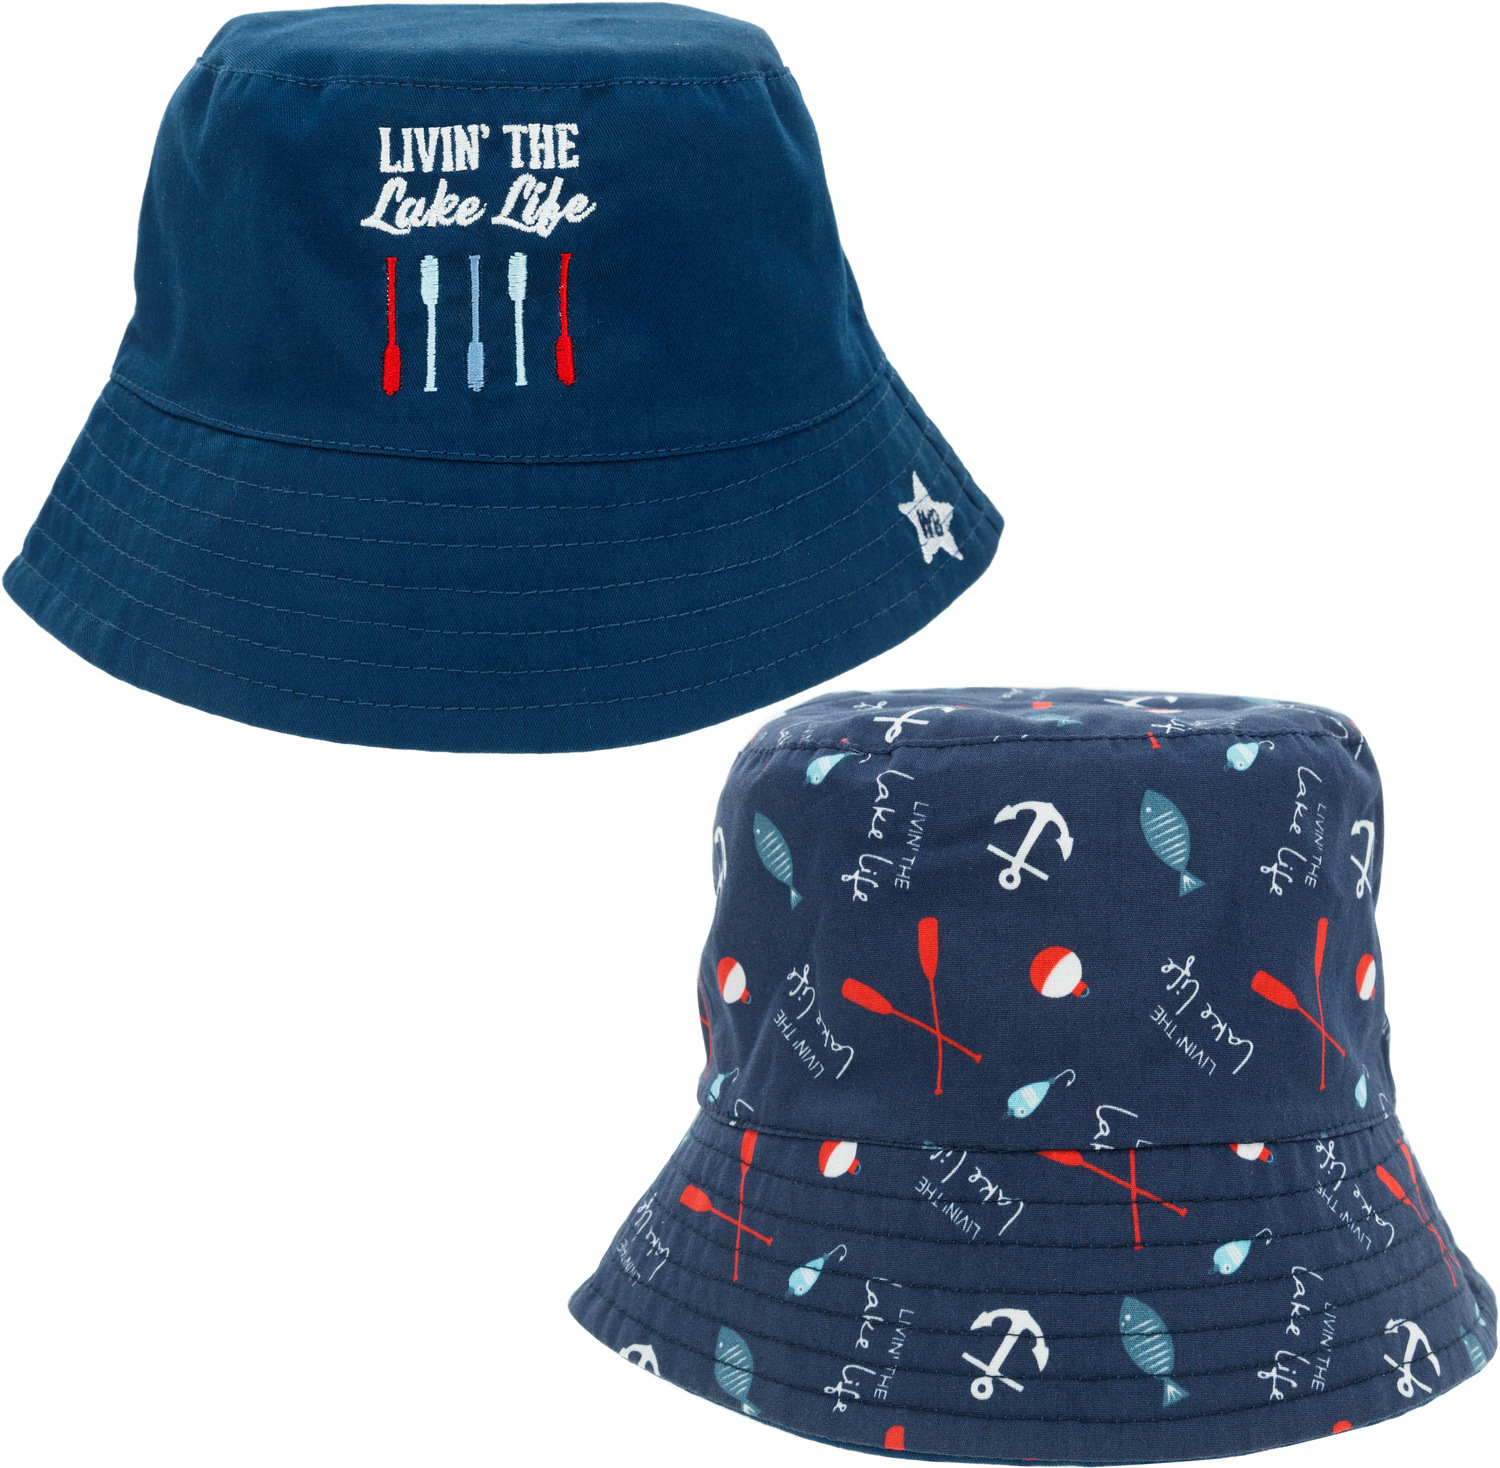 Lake Life by We Baby - Lake Life - Reversible Bucket Hat
6-12 Months